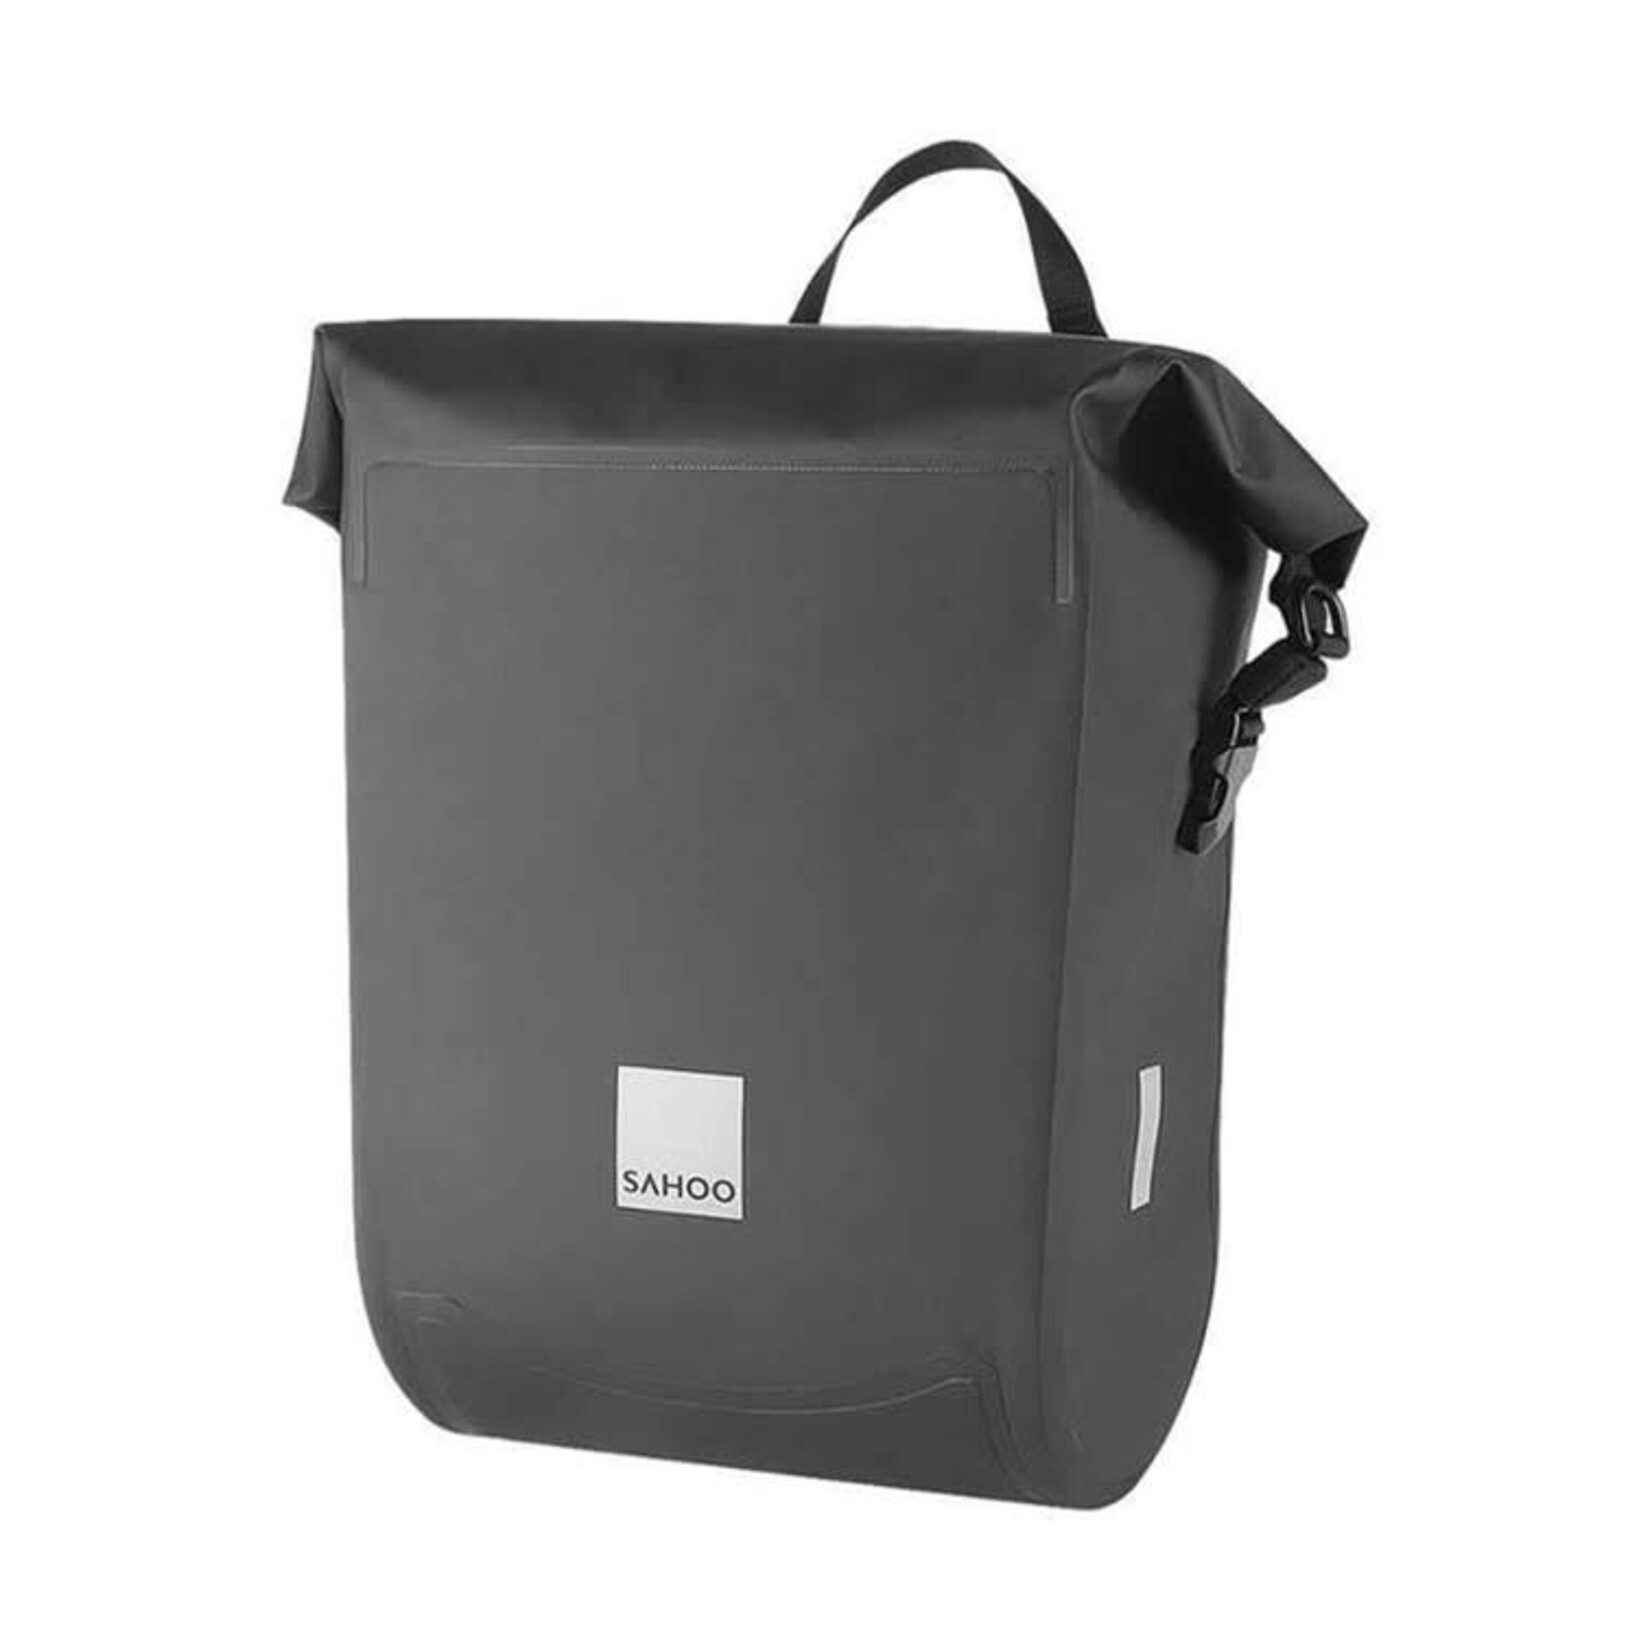 Sahoo Sahoo Single Pannier Bag 20L Waterproof Black